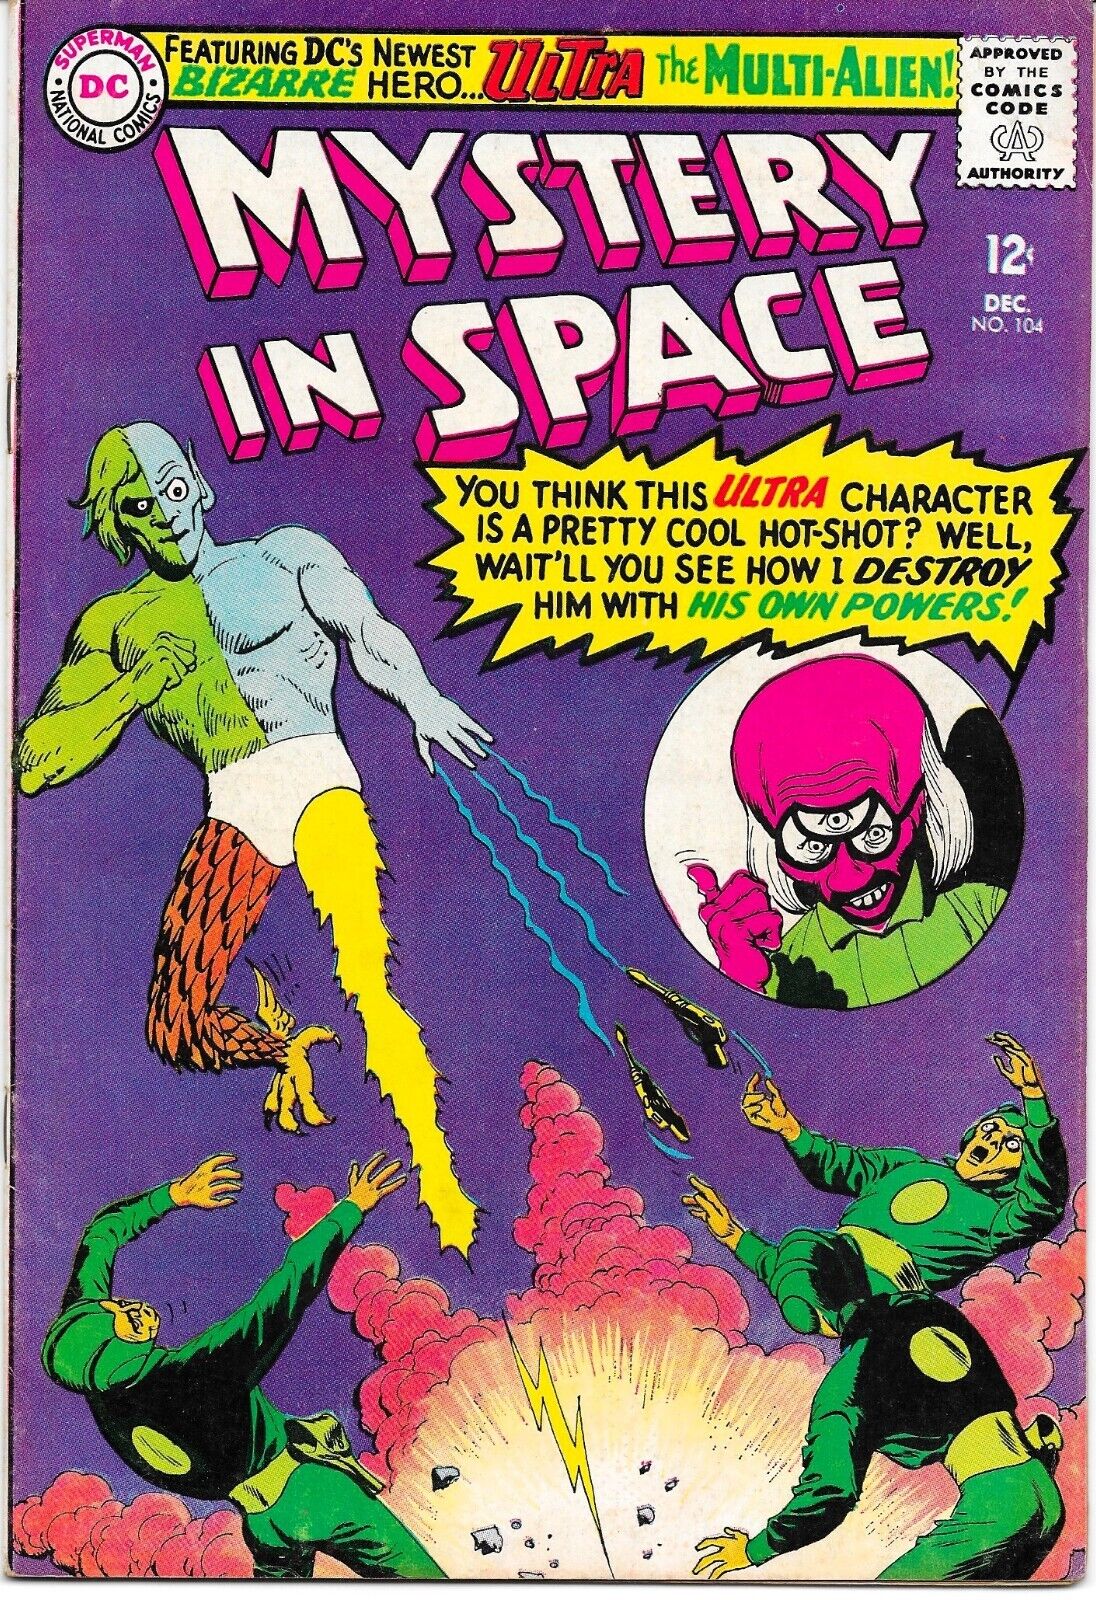 MYSTERY IN SPACE #104 (December 1965) DC Comics - Ultra, The Multi-Alien FN